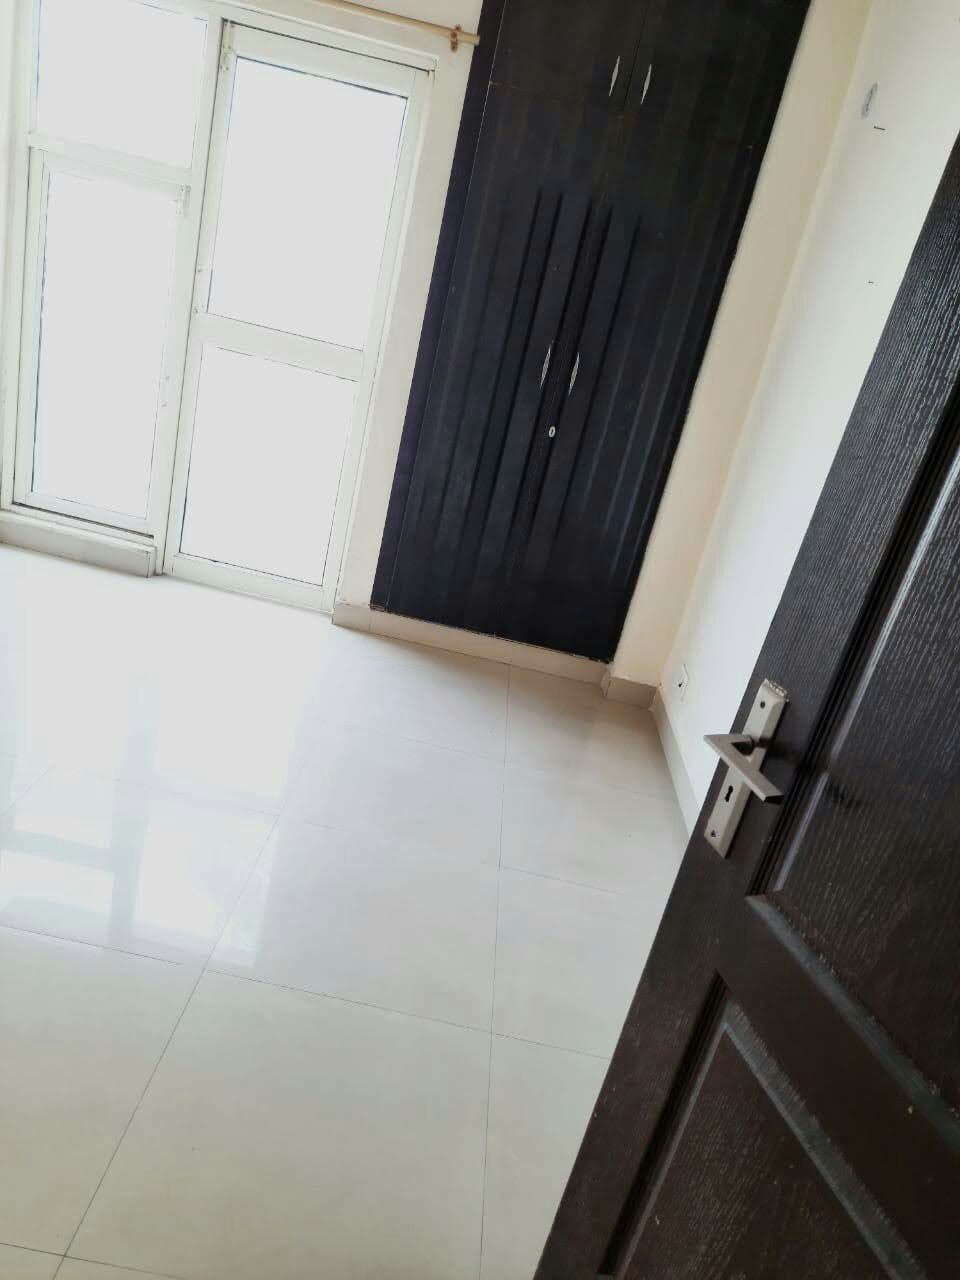 2bhk flat available for rent in sector 75 Noida Uttar Pradesh